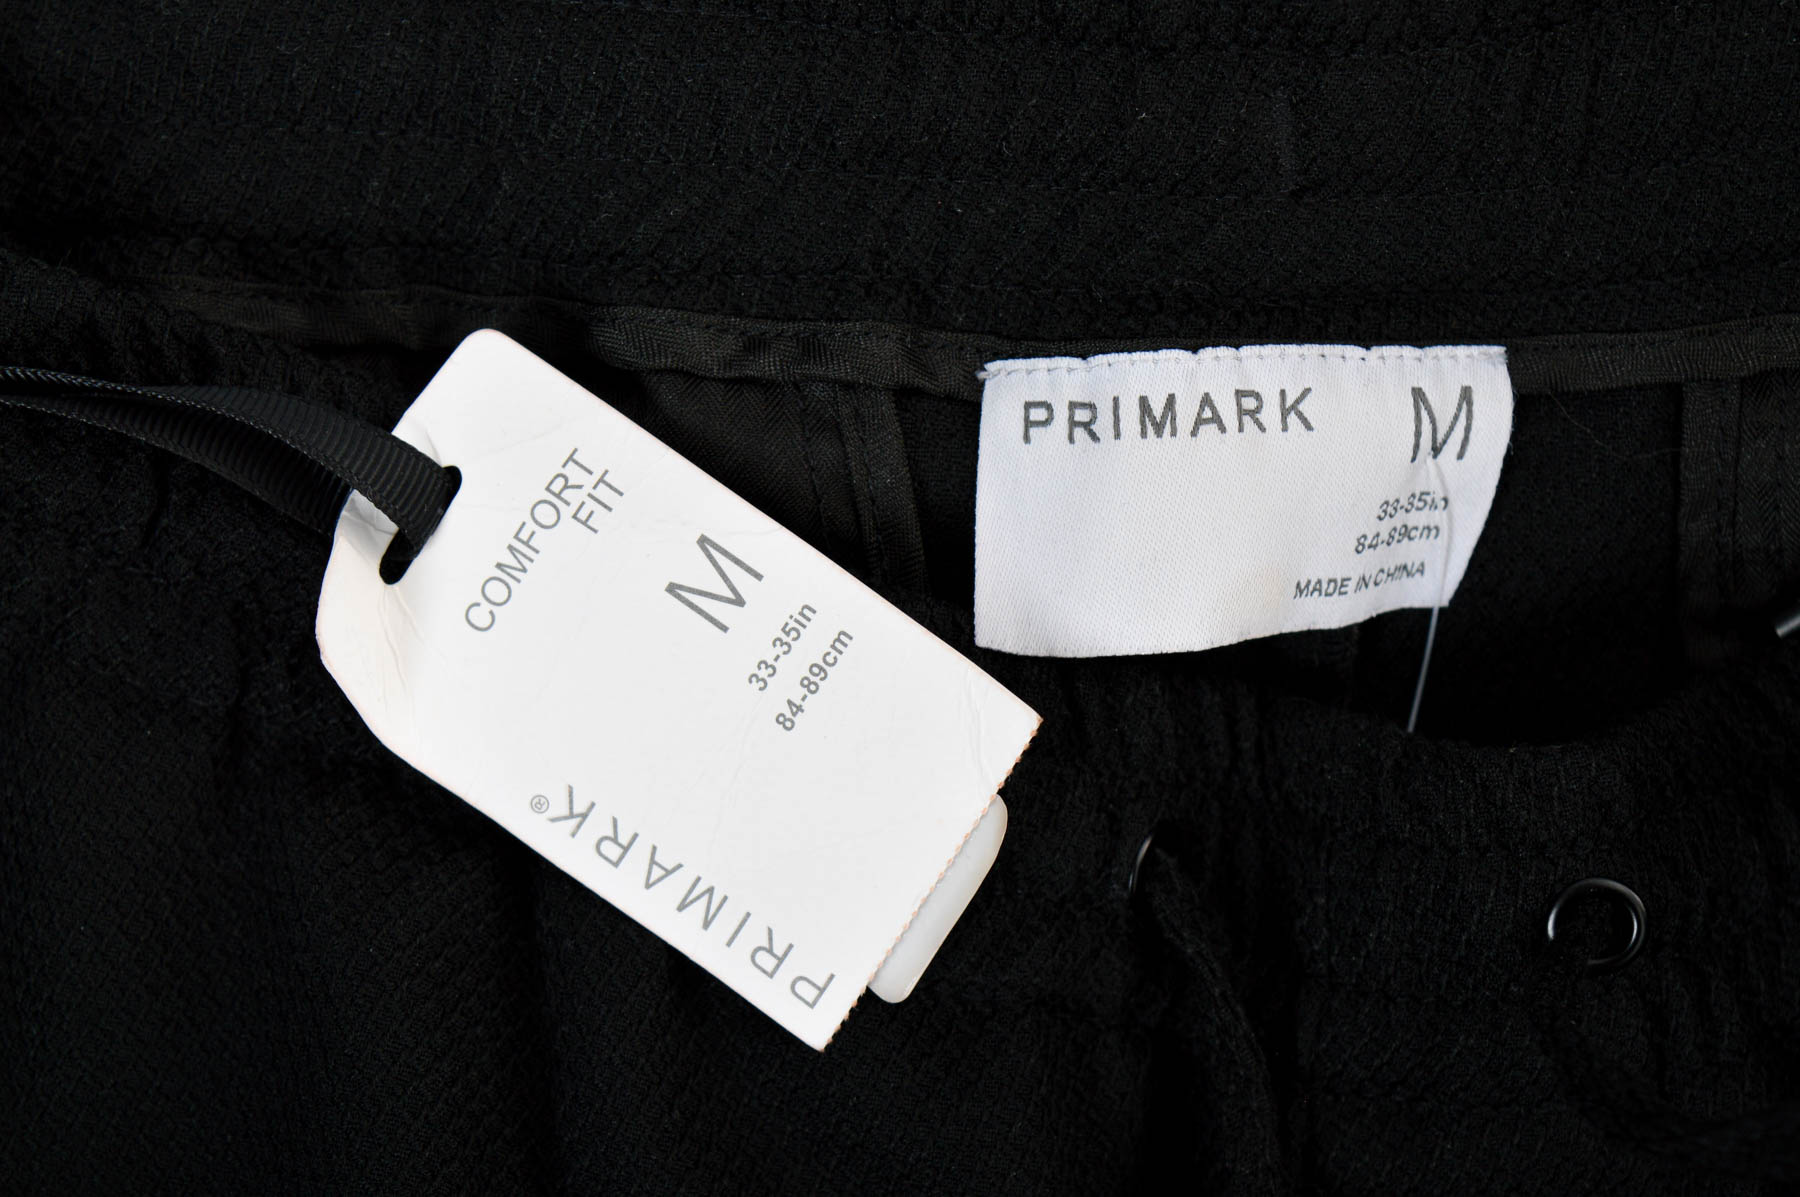 Men's trousers - PRIMARK - 2